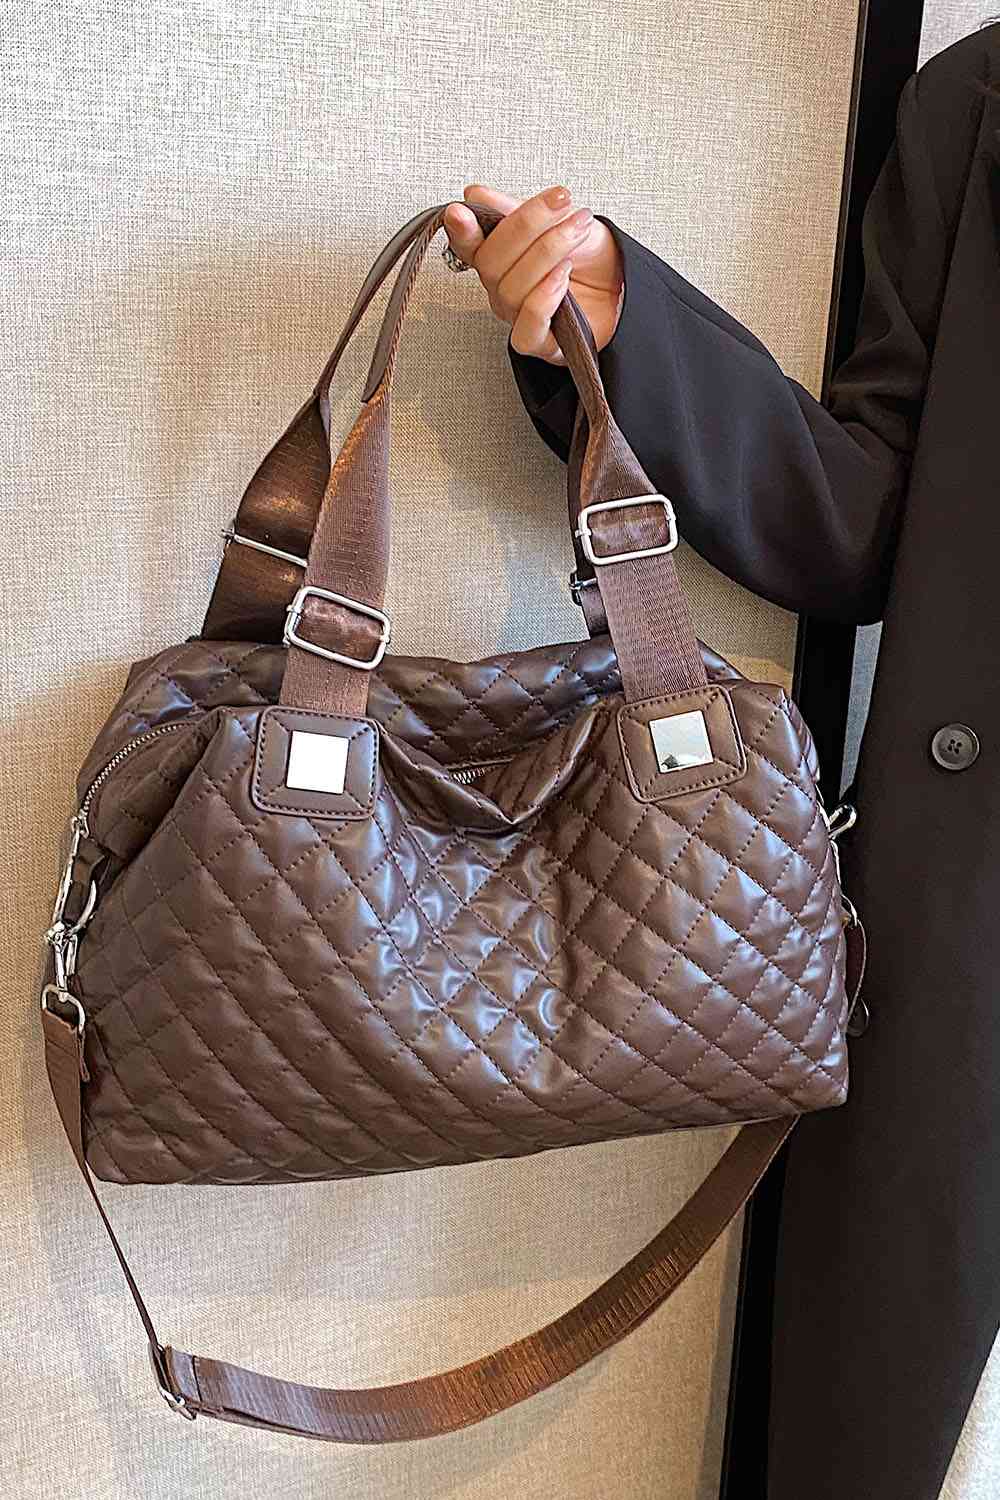 PU Leather Handbag - Just Enuff Sexy